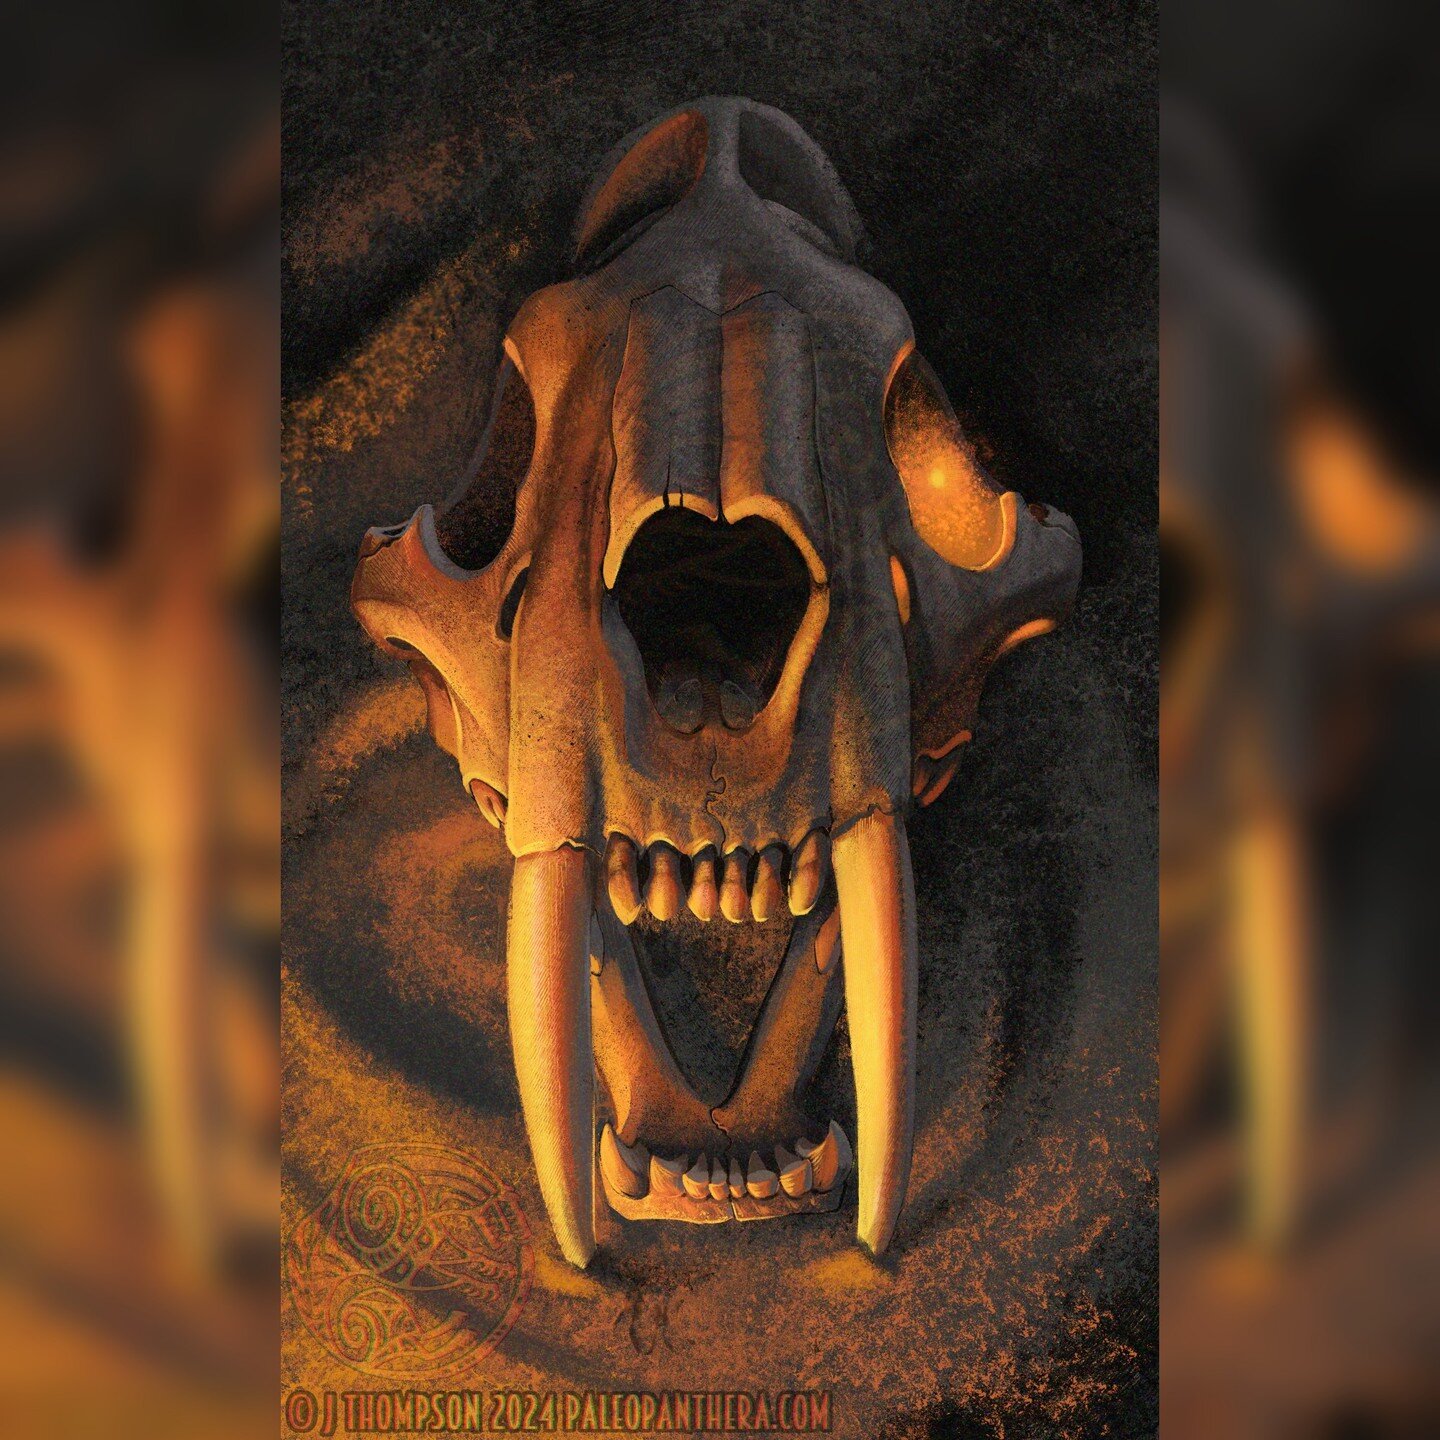 The Smilodon prospective oracle card. #art #paleontology #fossil #palaeosinensisart #fossils #smilodon #sabertooth #sabertoothtiger #bigcat #skull #skulls #vultureculture #bone #bones #oracledeck #oraclecards #tarot #illustration #digitalart #paintin